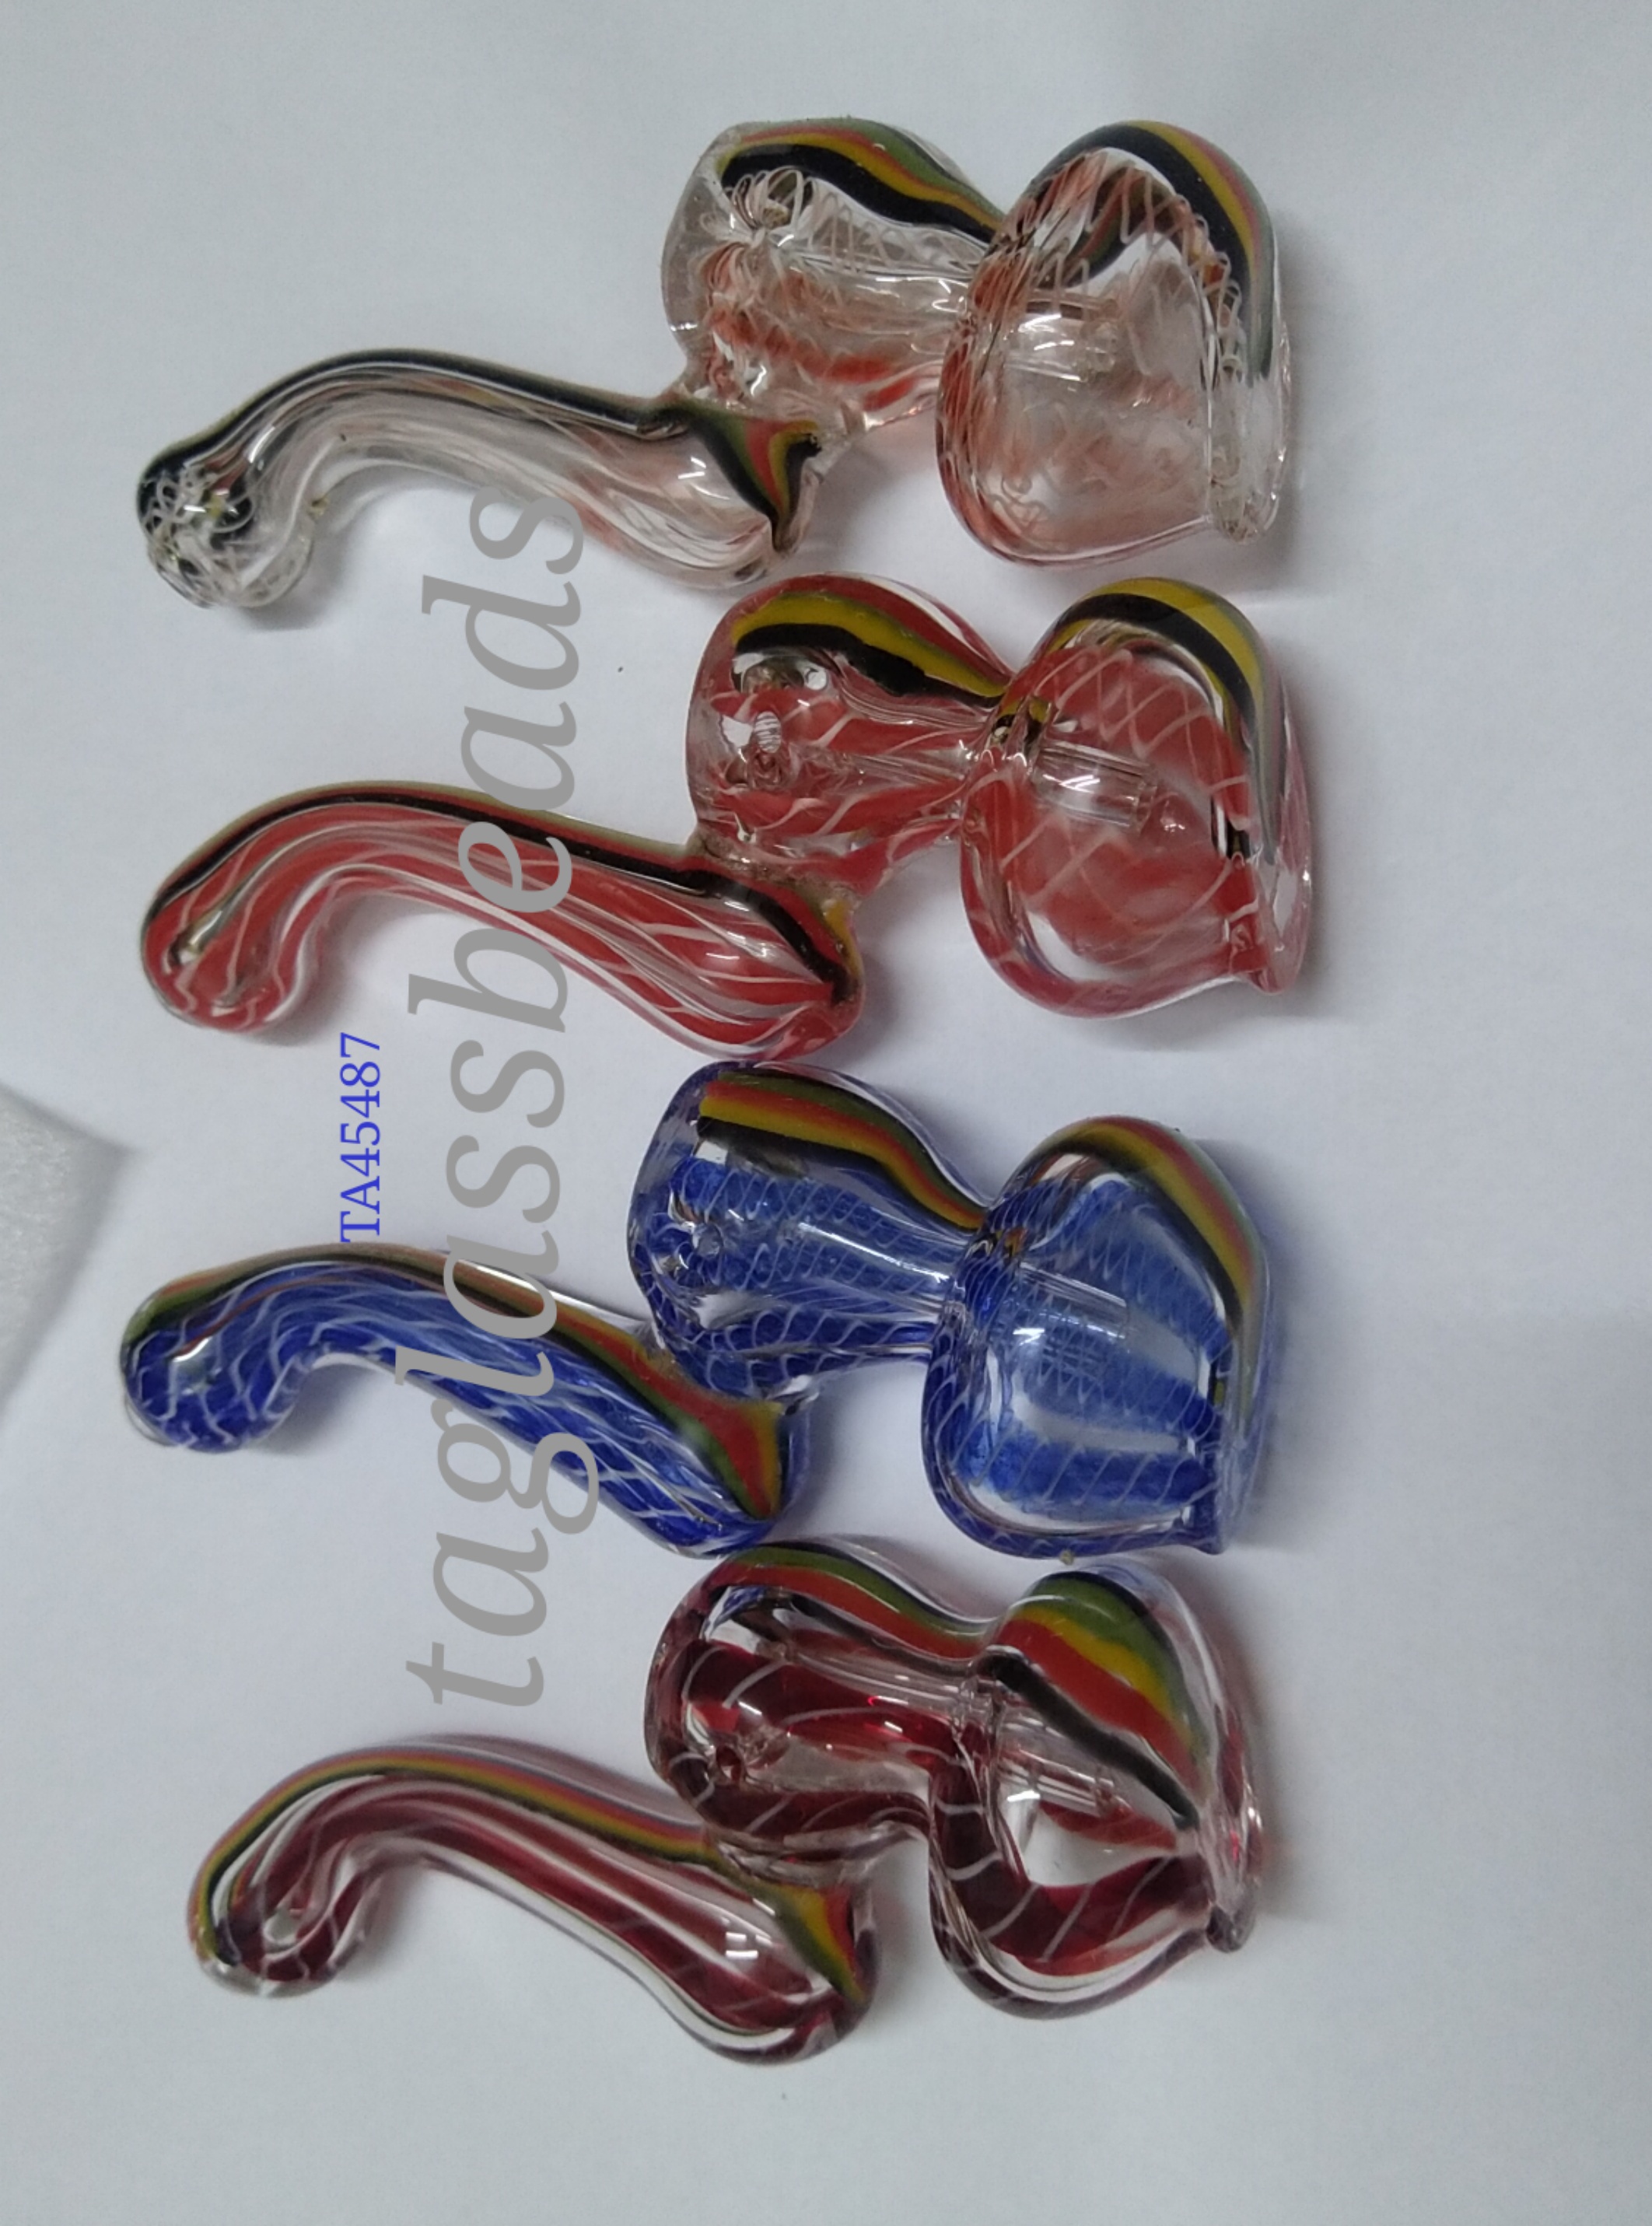 Glass bubbler  4"60 gm price $ 2.50